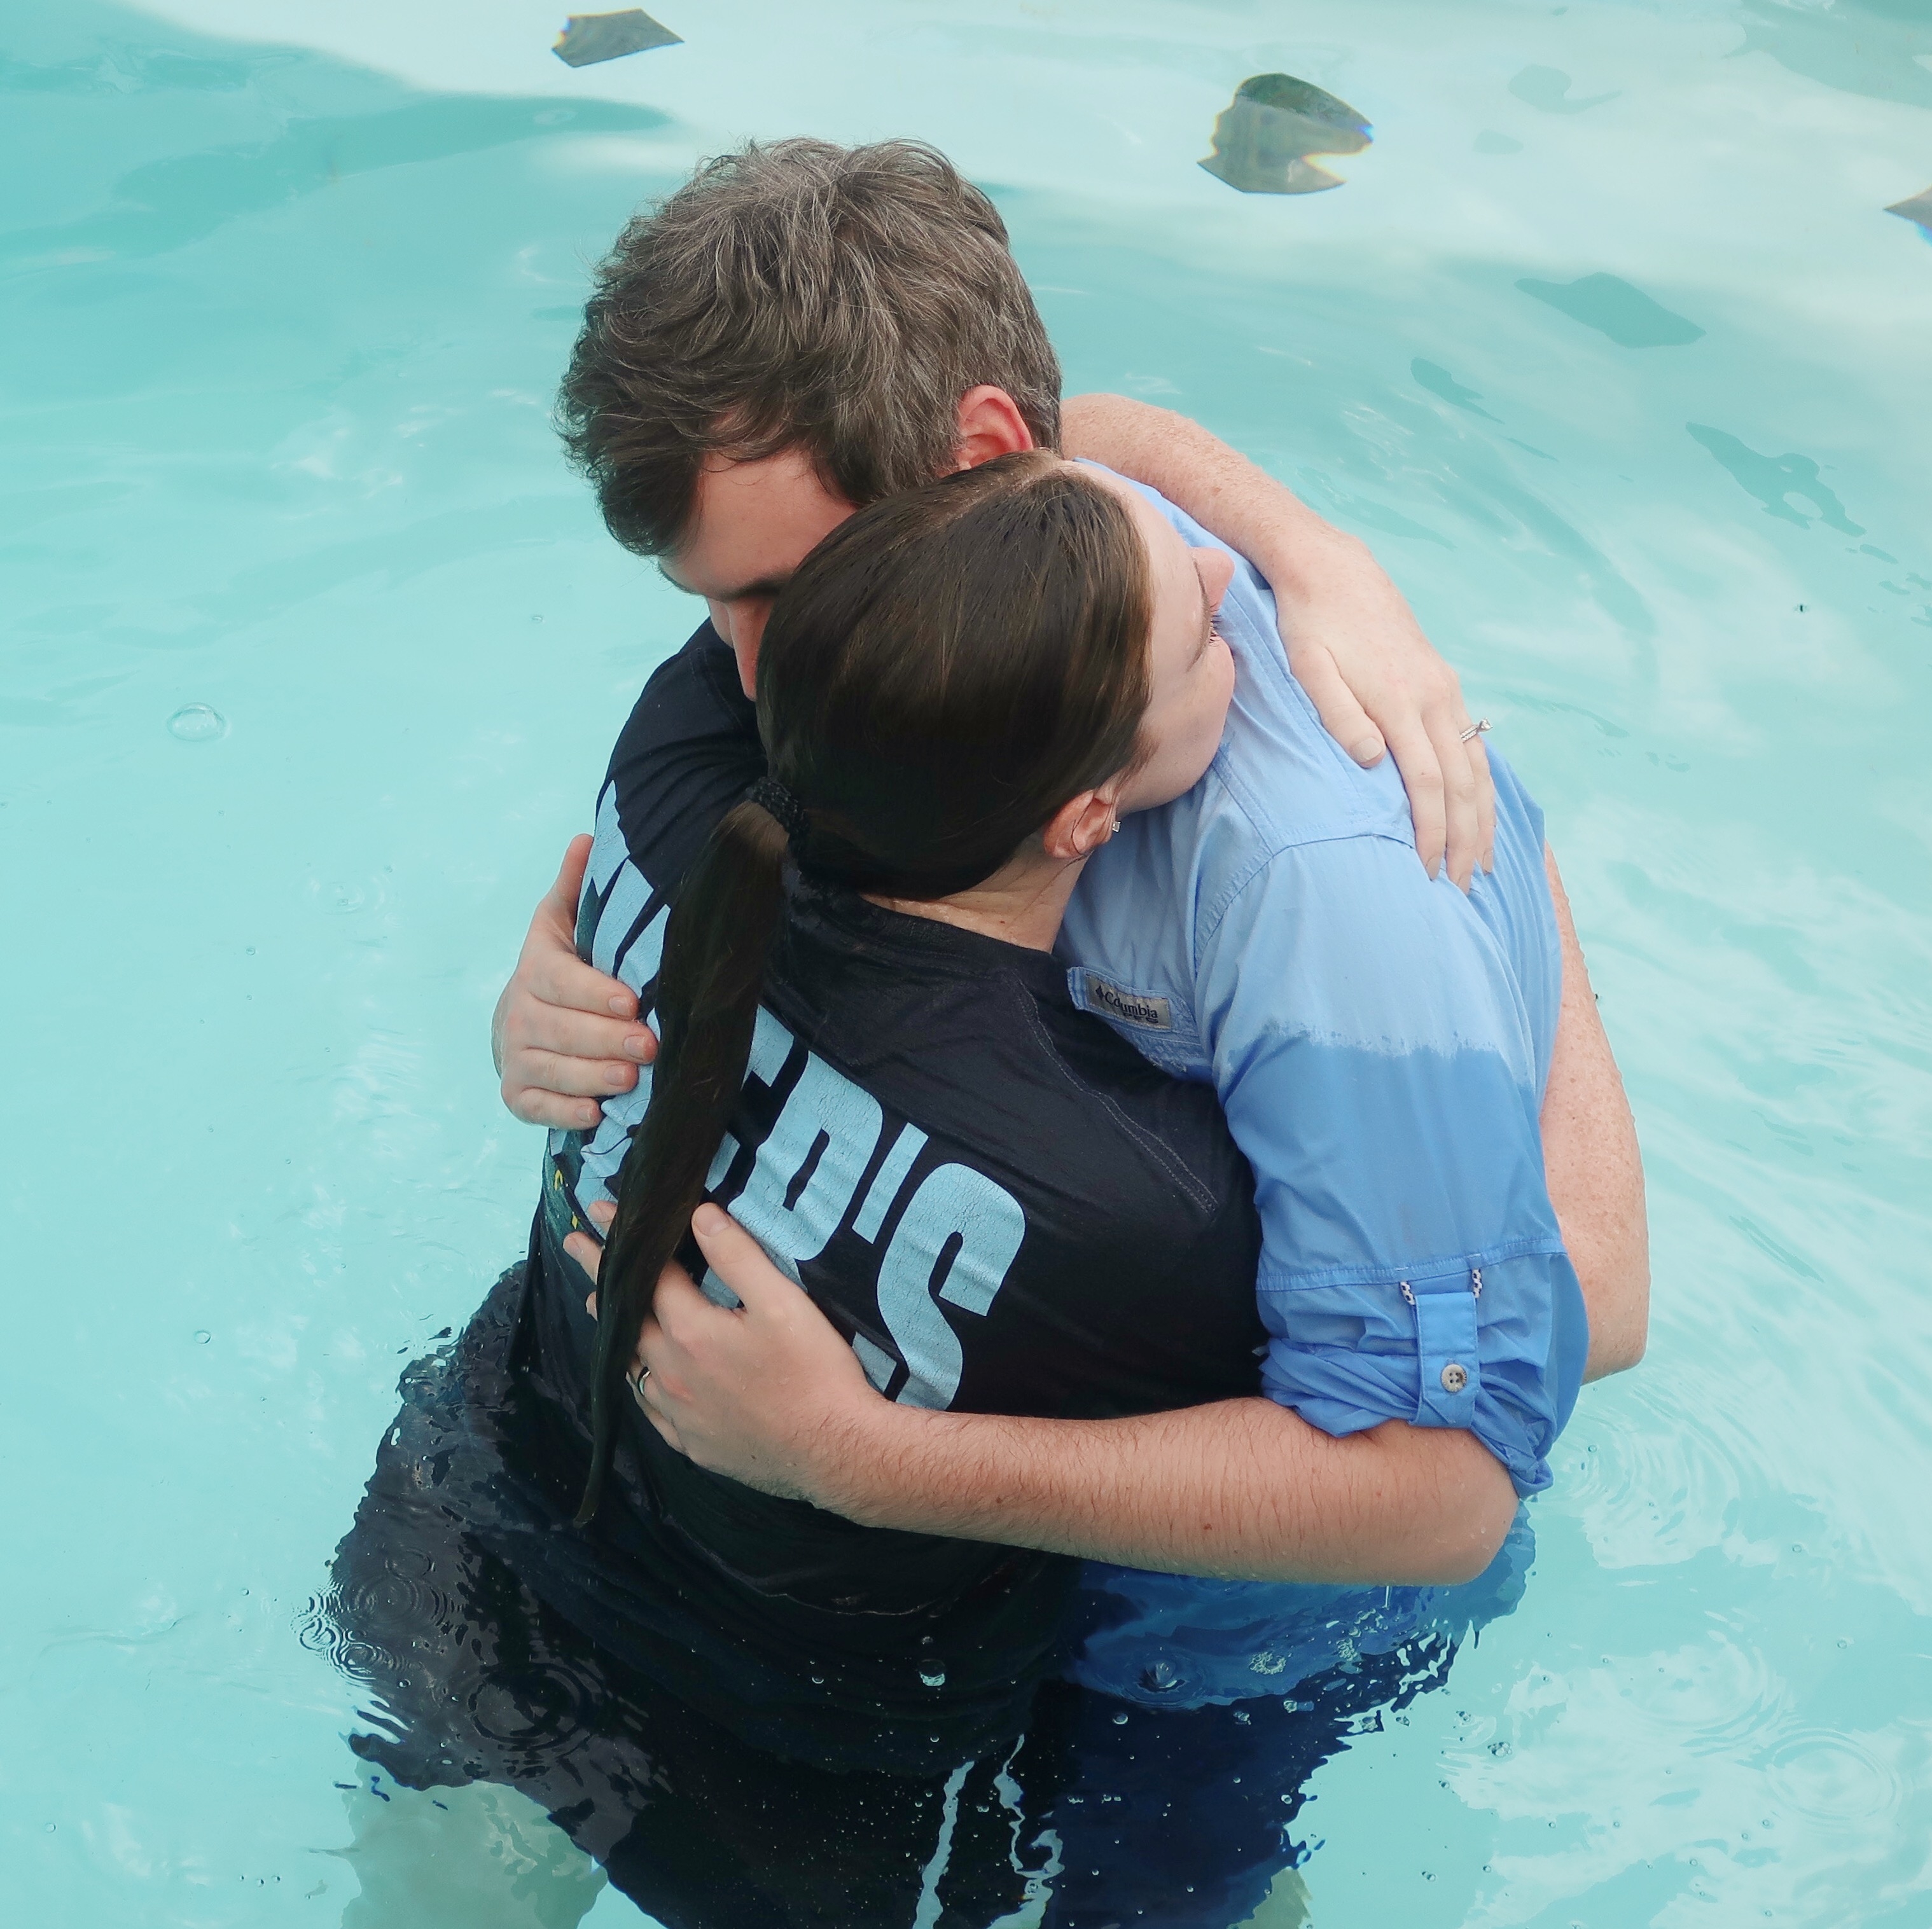 My Baptism Story | Blairblogs.com